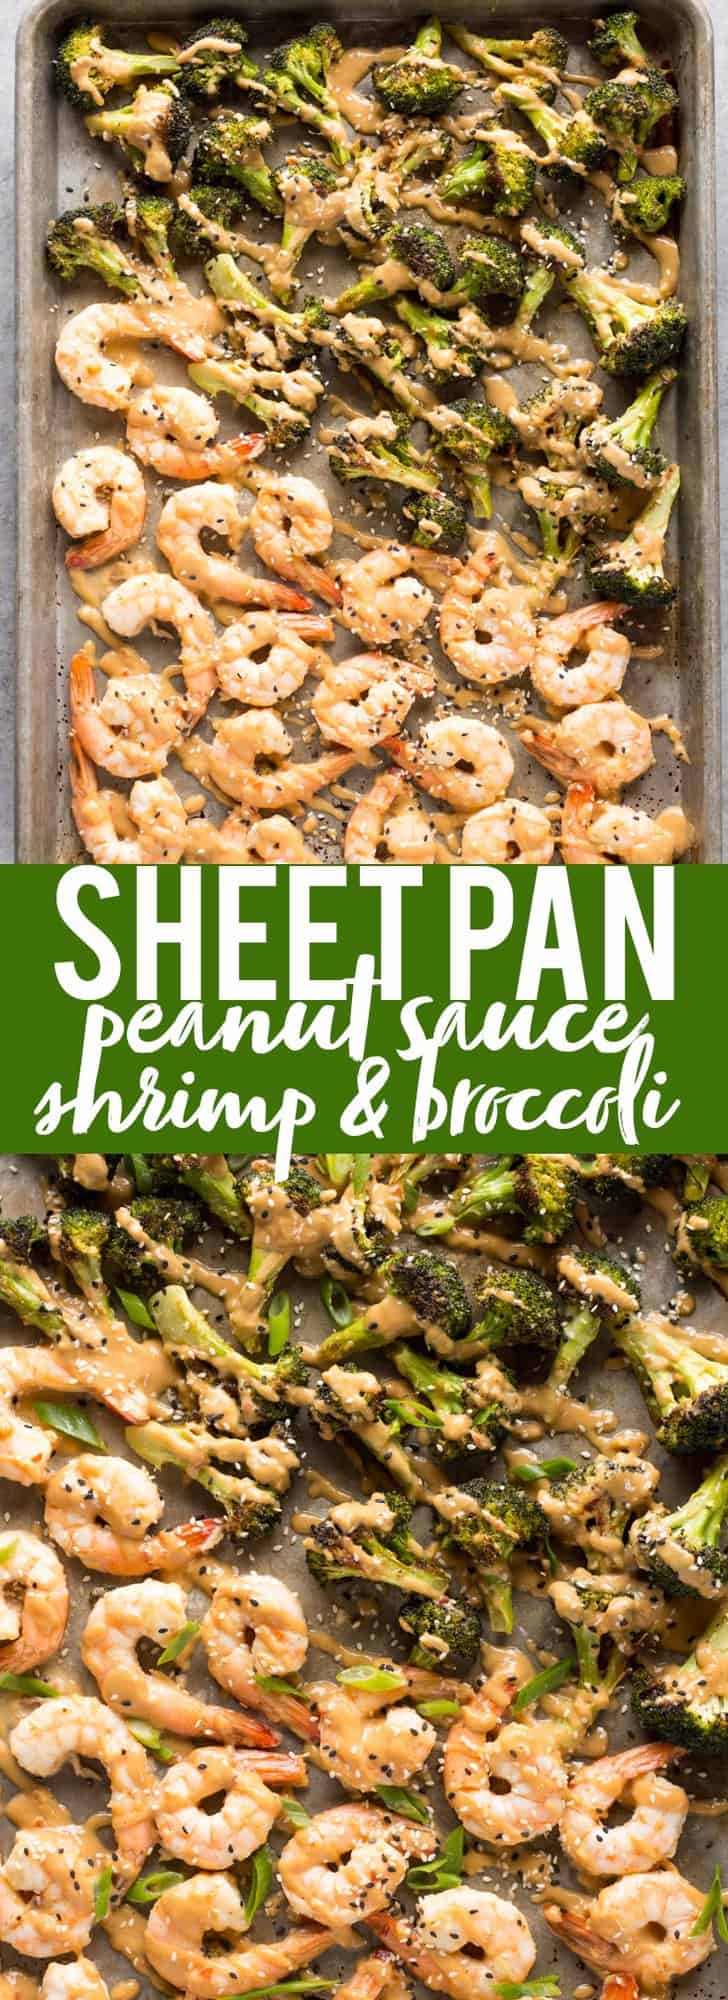 Sheet Pan Peanut Sauce Shrimp and Broccoli | Sheet pan dinner | shrimp recipe |Easy Dinner | healthy Dinner | Quick Dinner